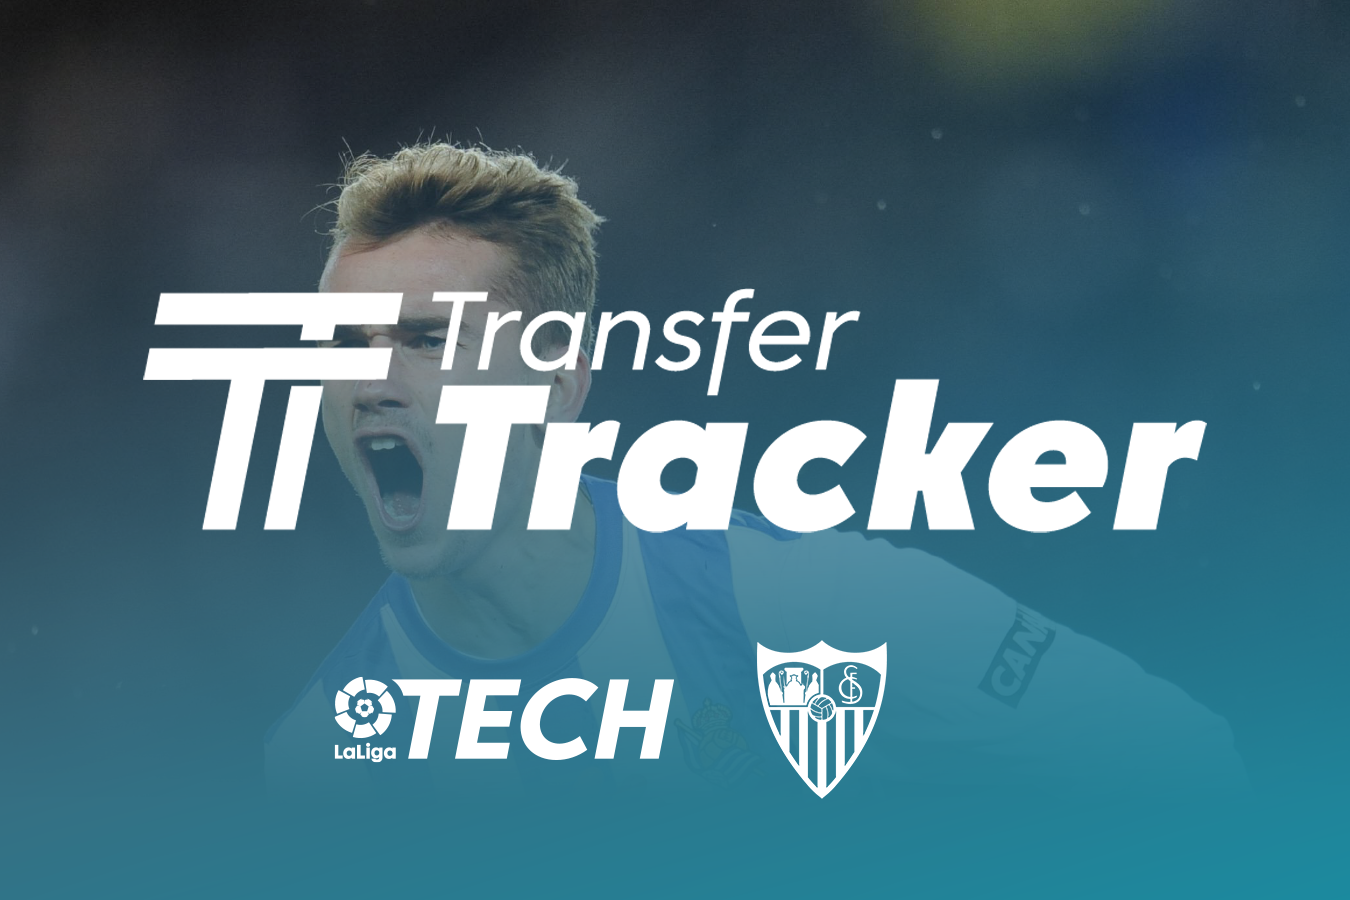 LaLiga markets Sevilla 'Transfer Tracker' to recover unpaid player fees